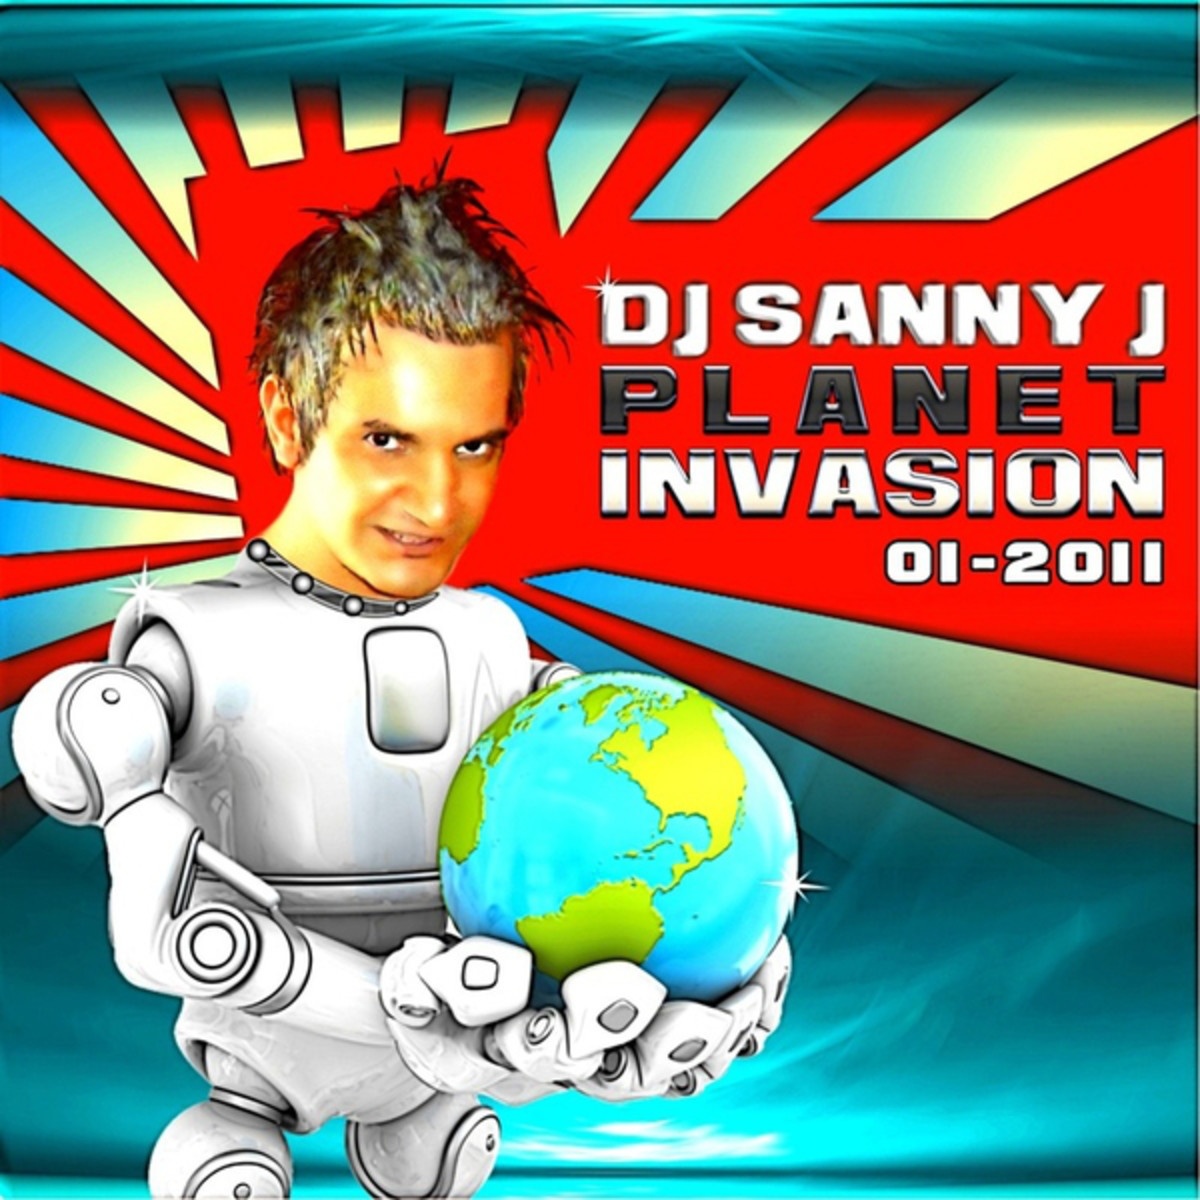 Planet Invasion 01-2011